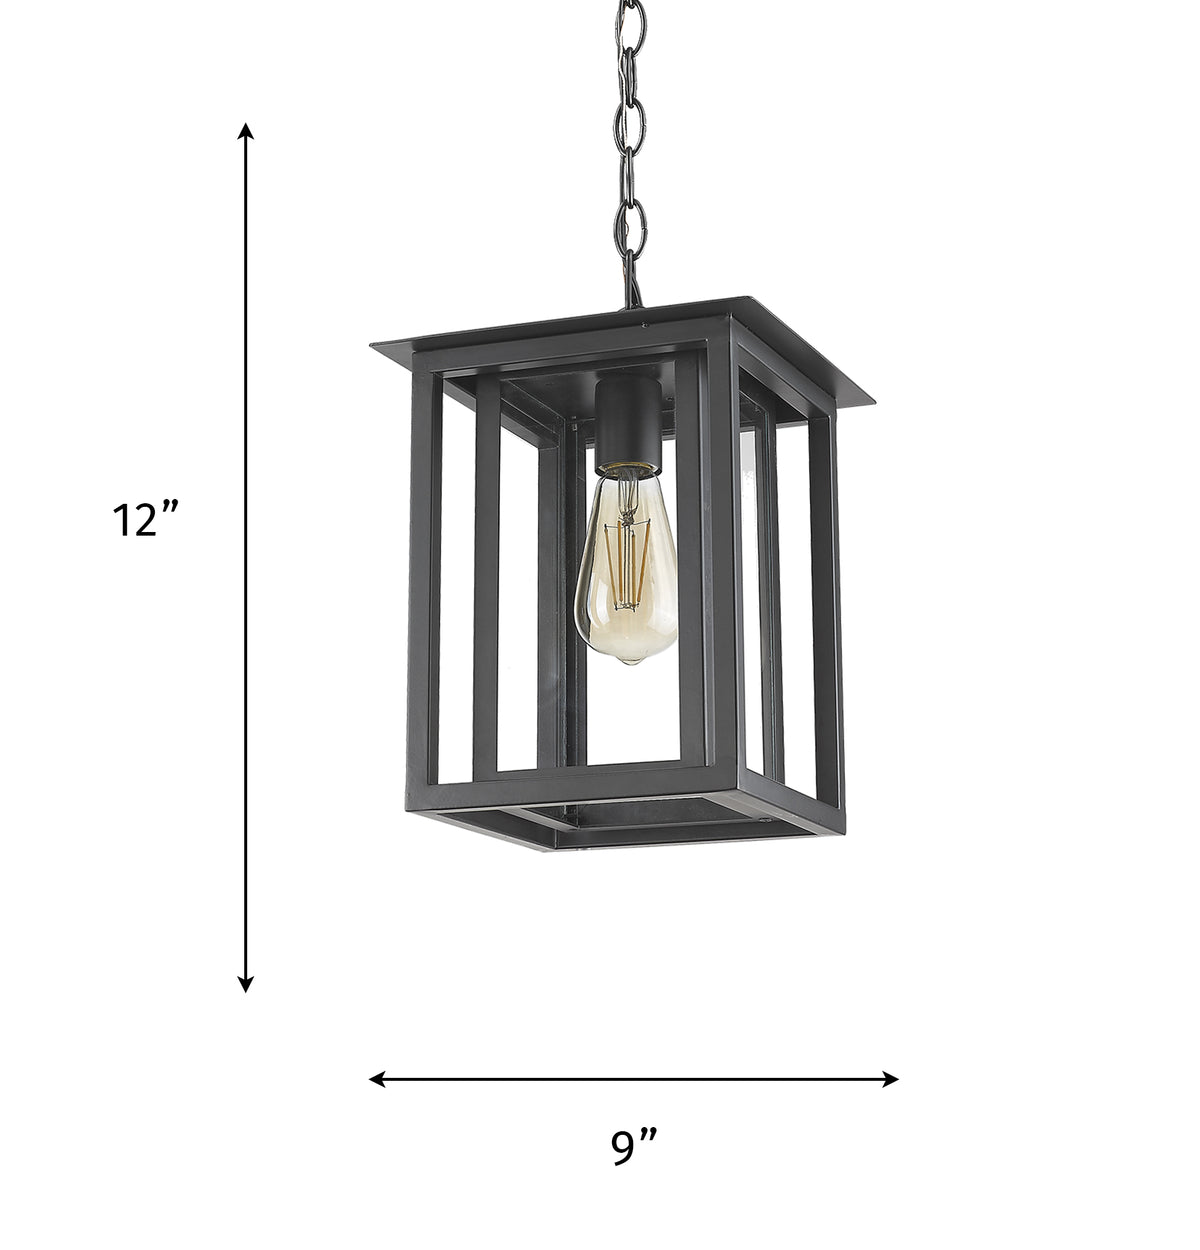 Noro Farmhouse Outdoor Pendant Light Lantern, Outdoor Coach Light with Seeded Glass – Matte Black